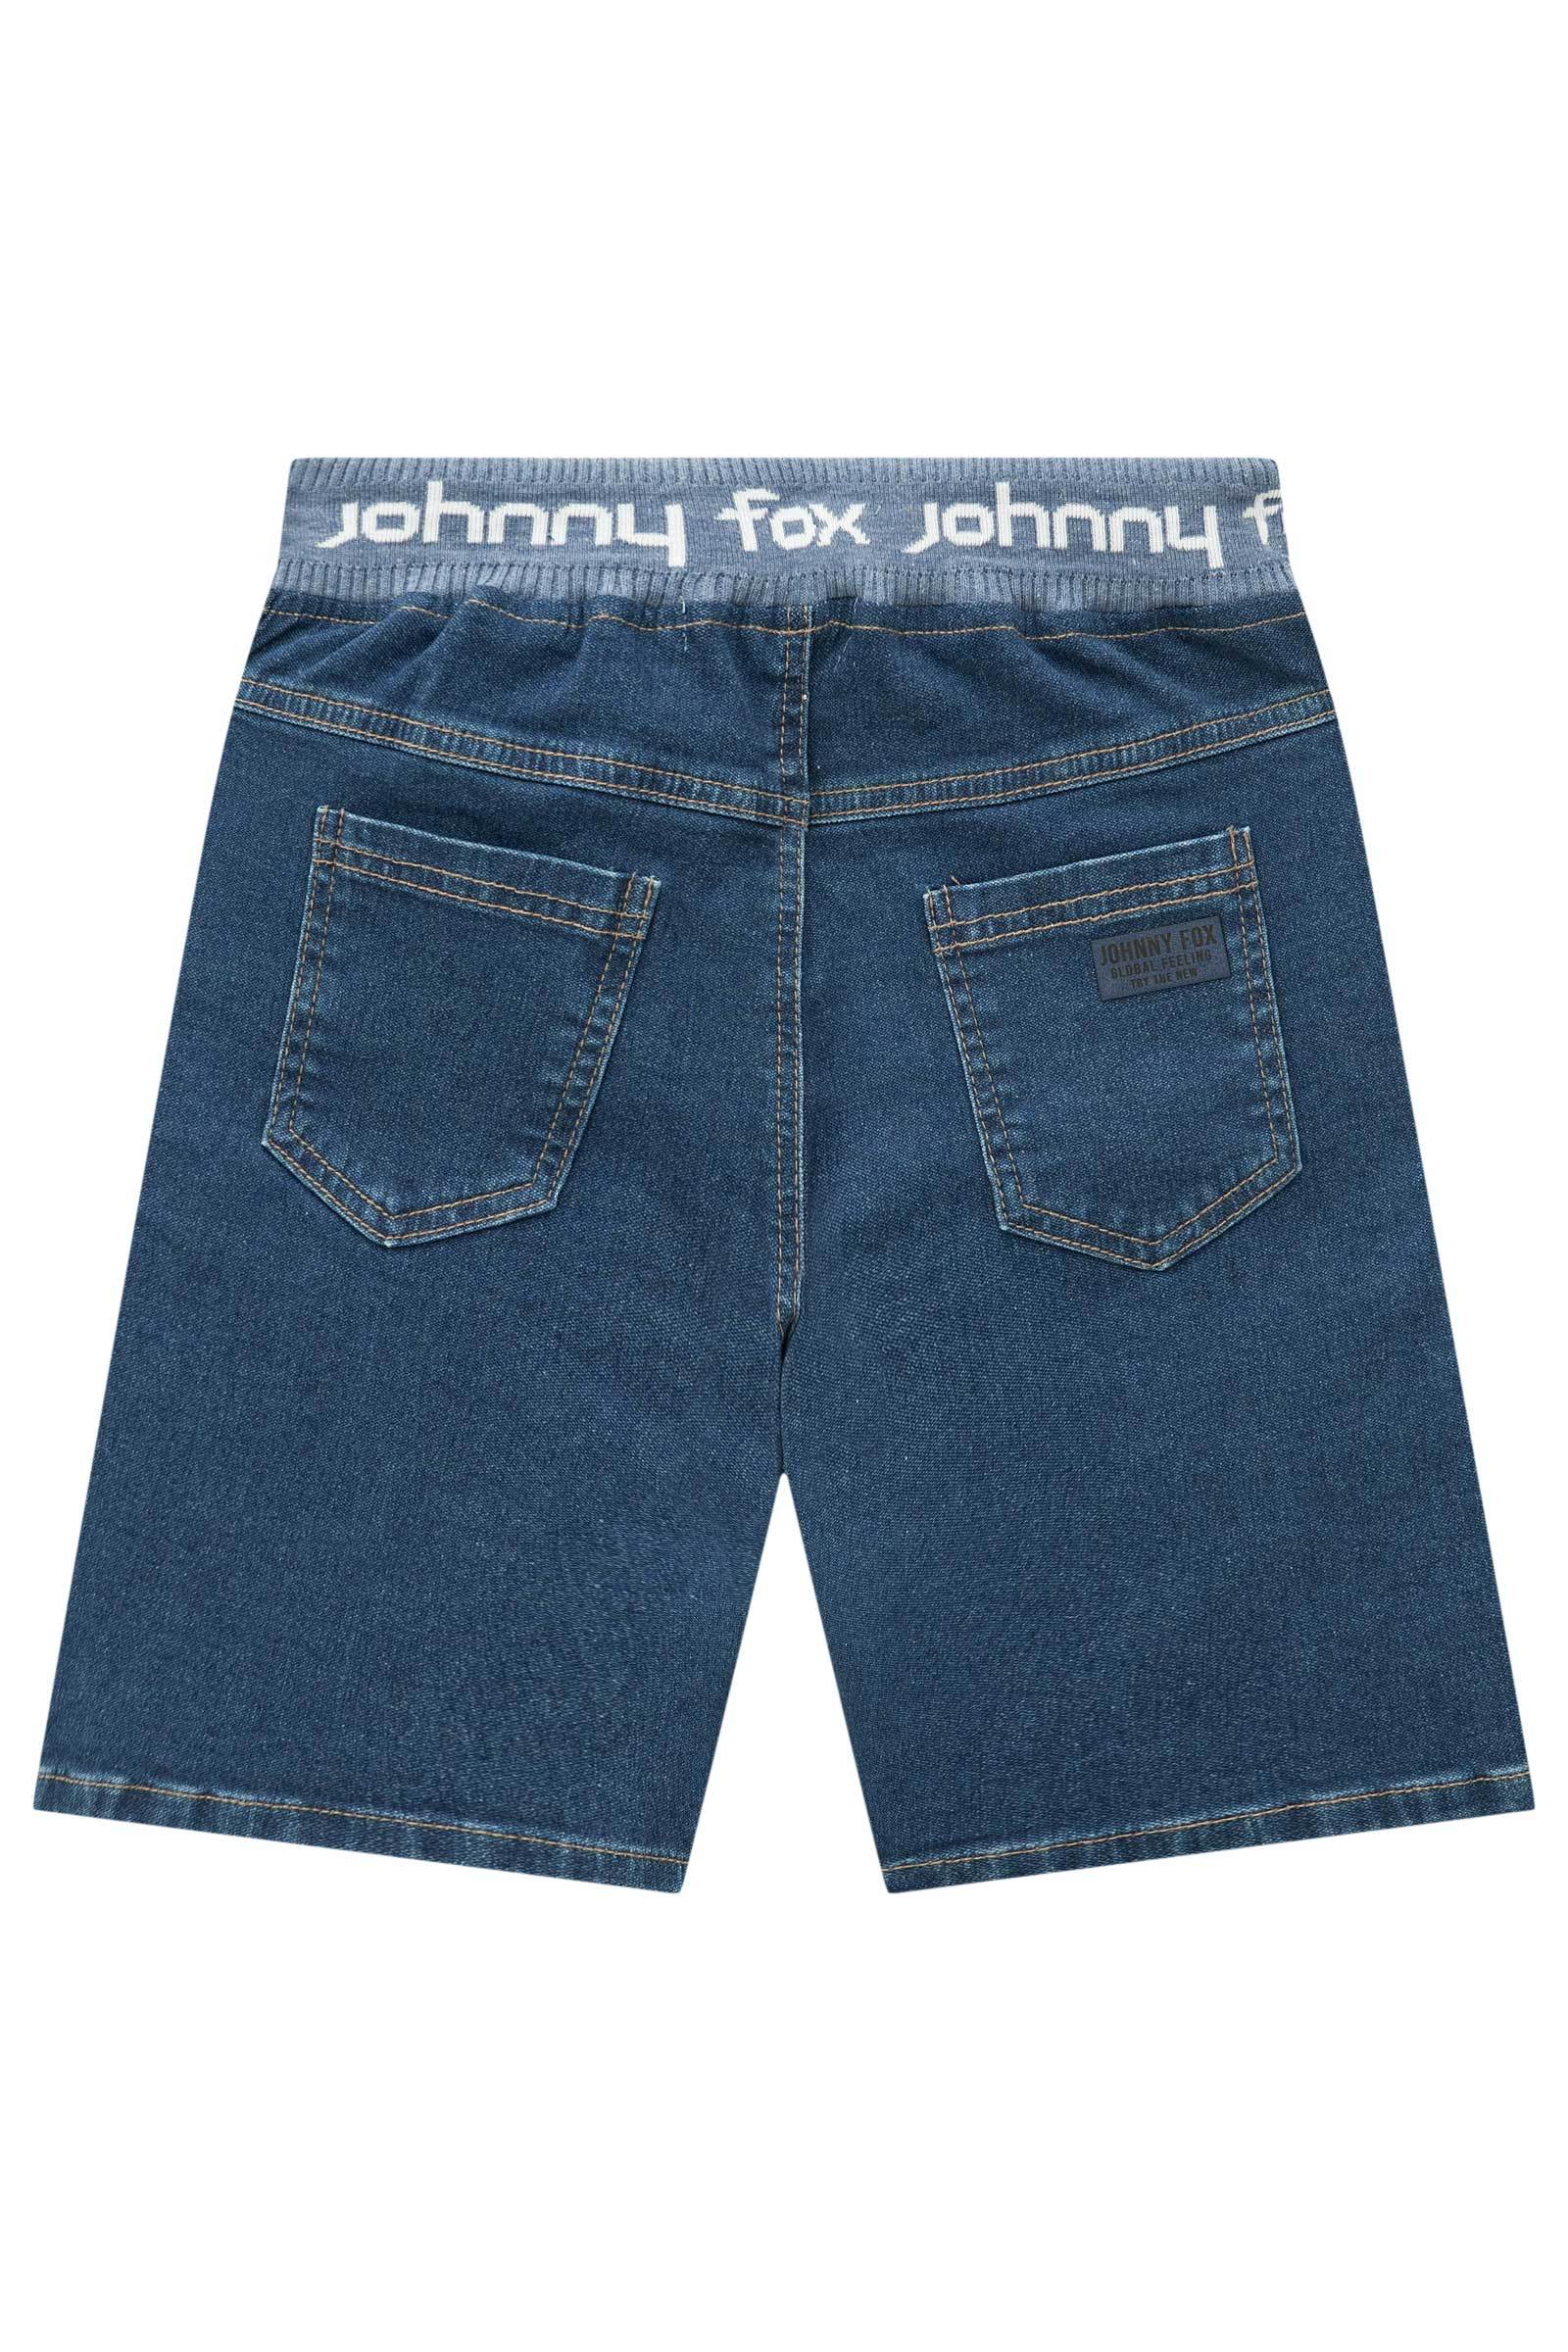 Bermuda em Malha Jeans Trek com Elastano 74708 Johnny Fox